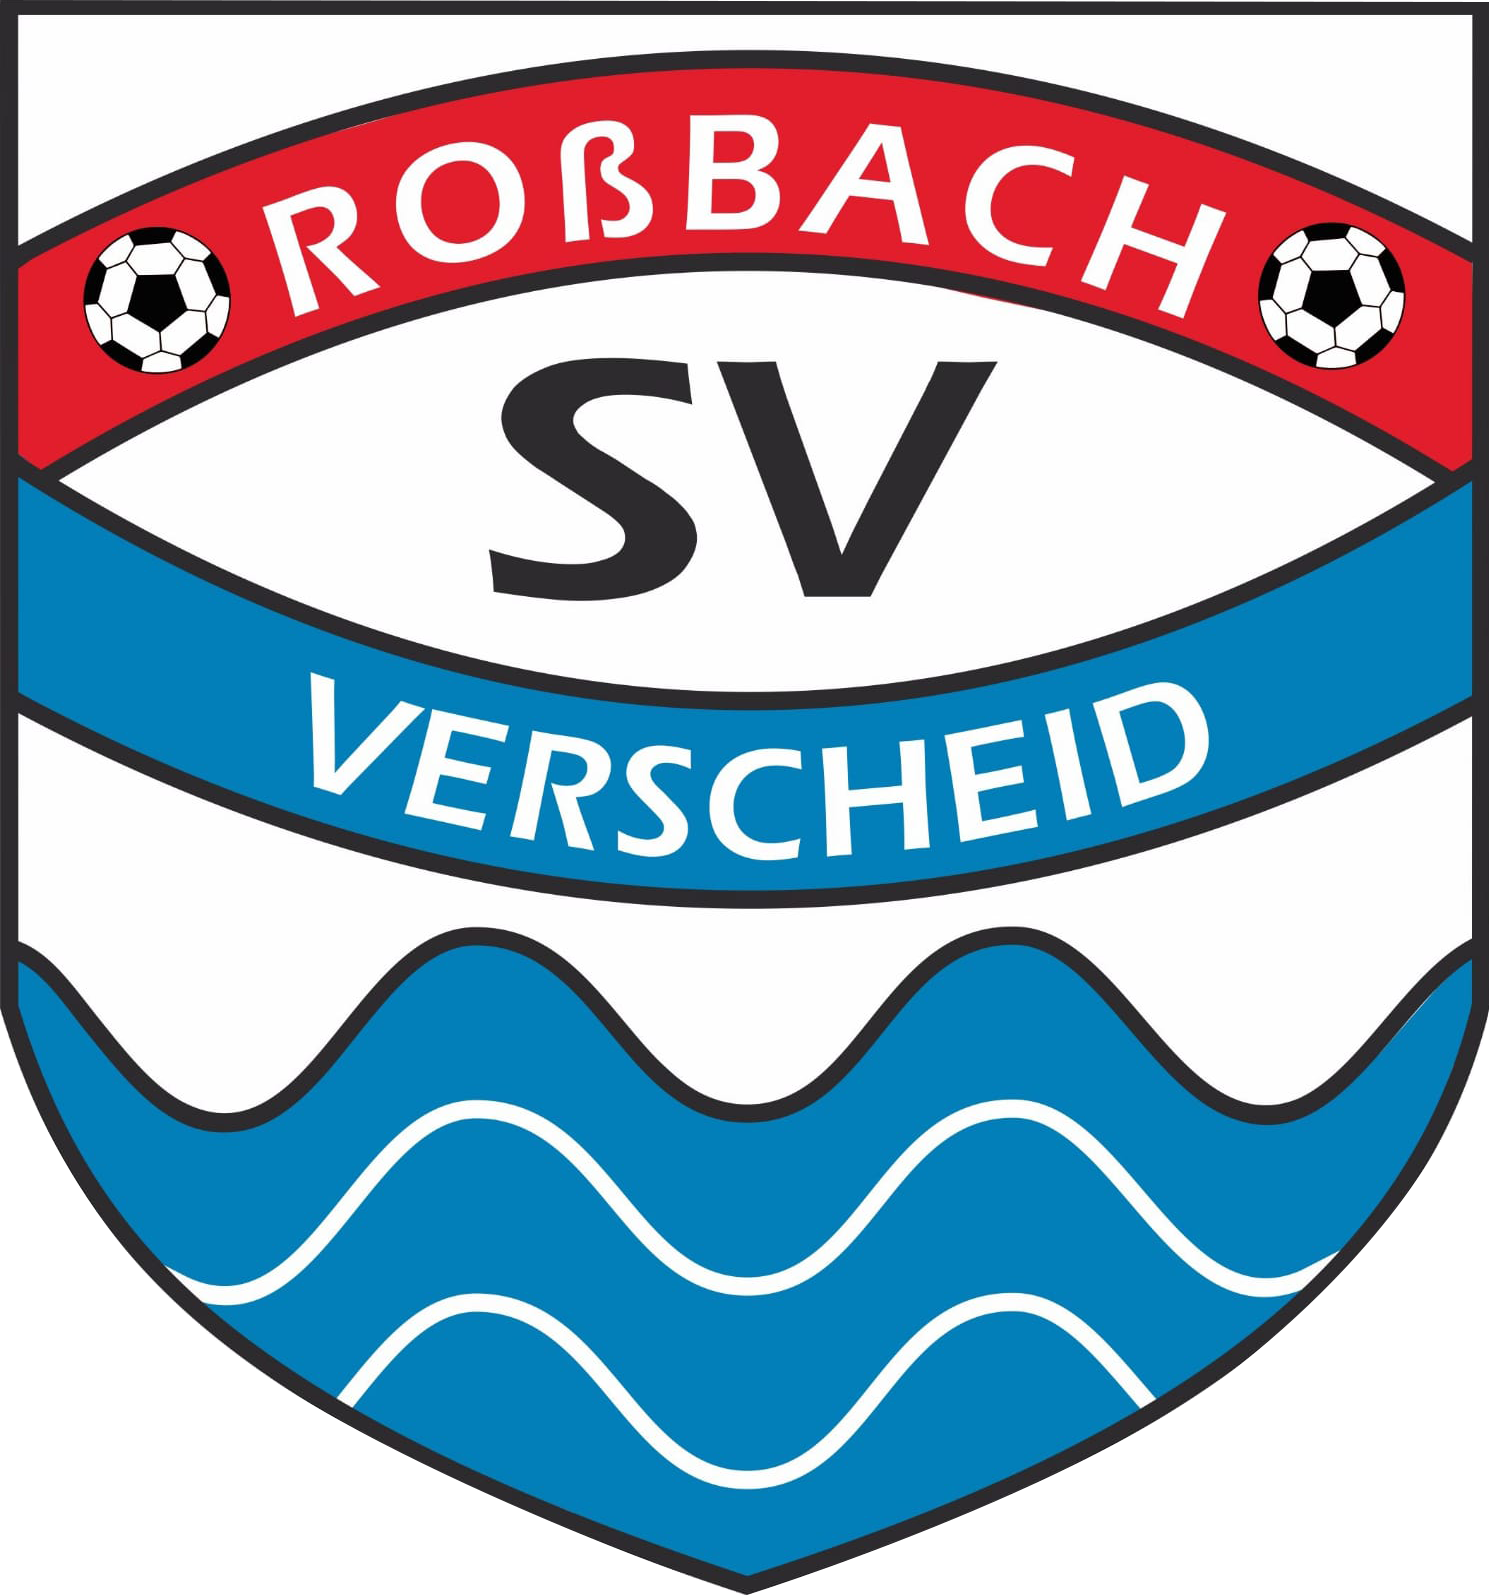 SV Roßbach Verscheid